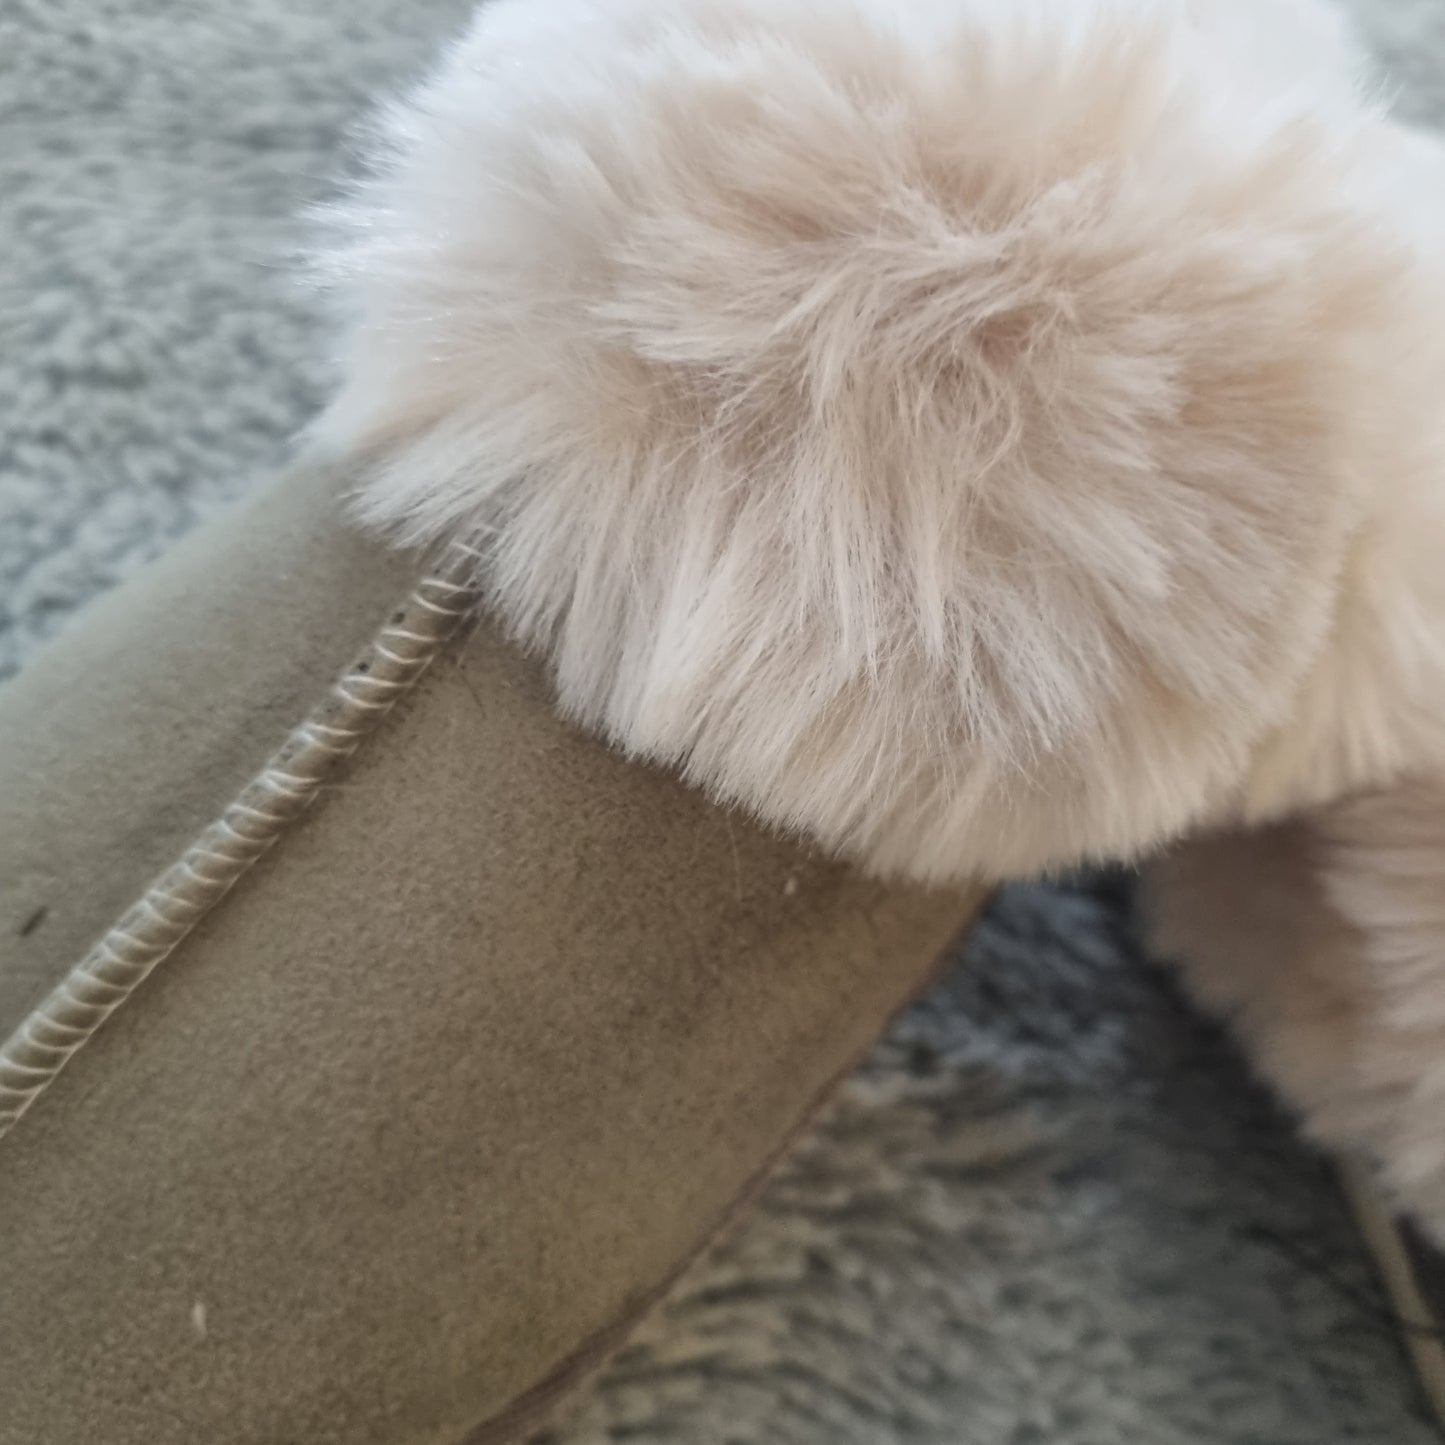 Lizzie faux fur enclosed slippers